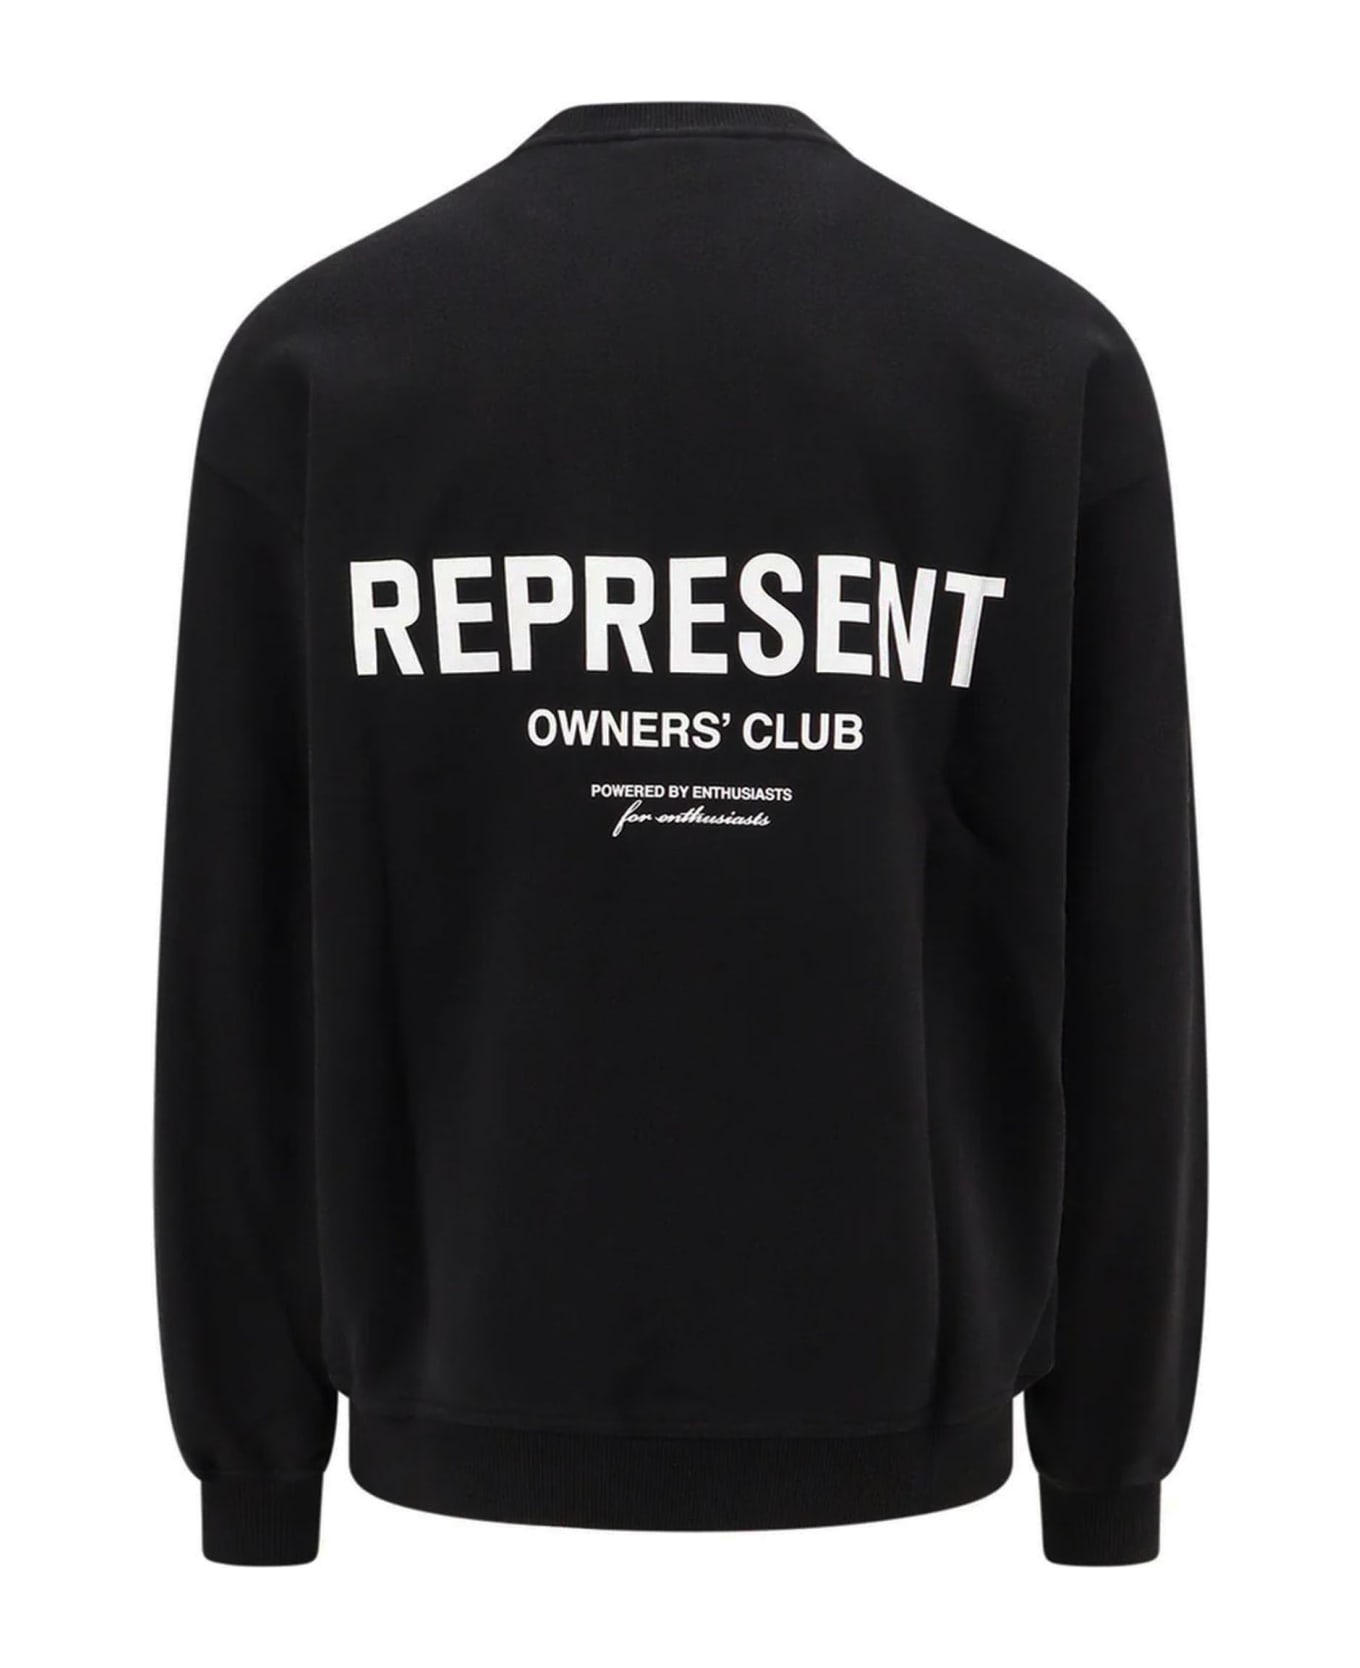 REPRESENT Black Cotton Sweatshirt - BLACK